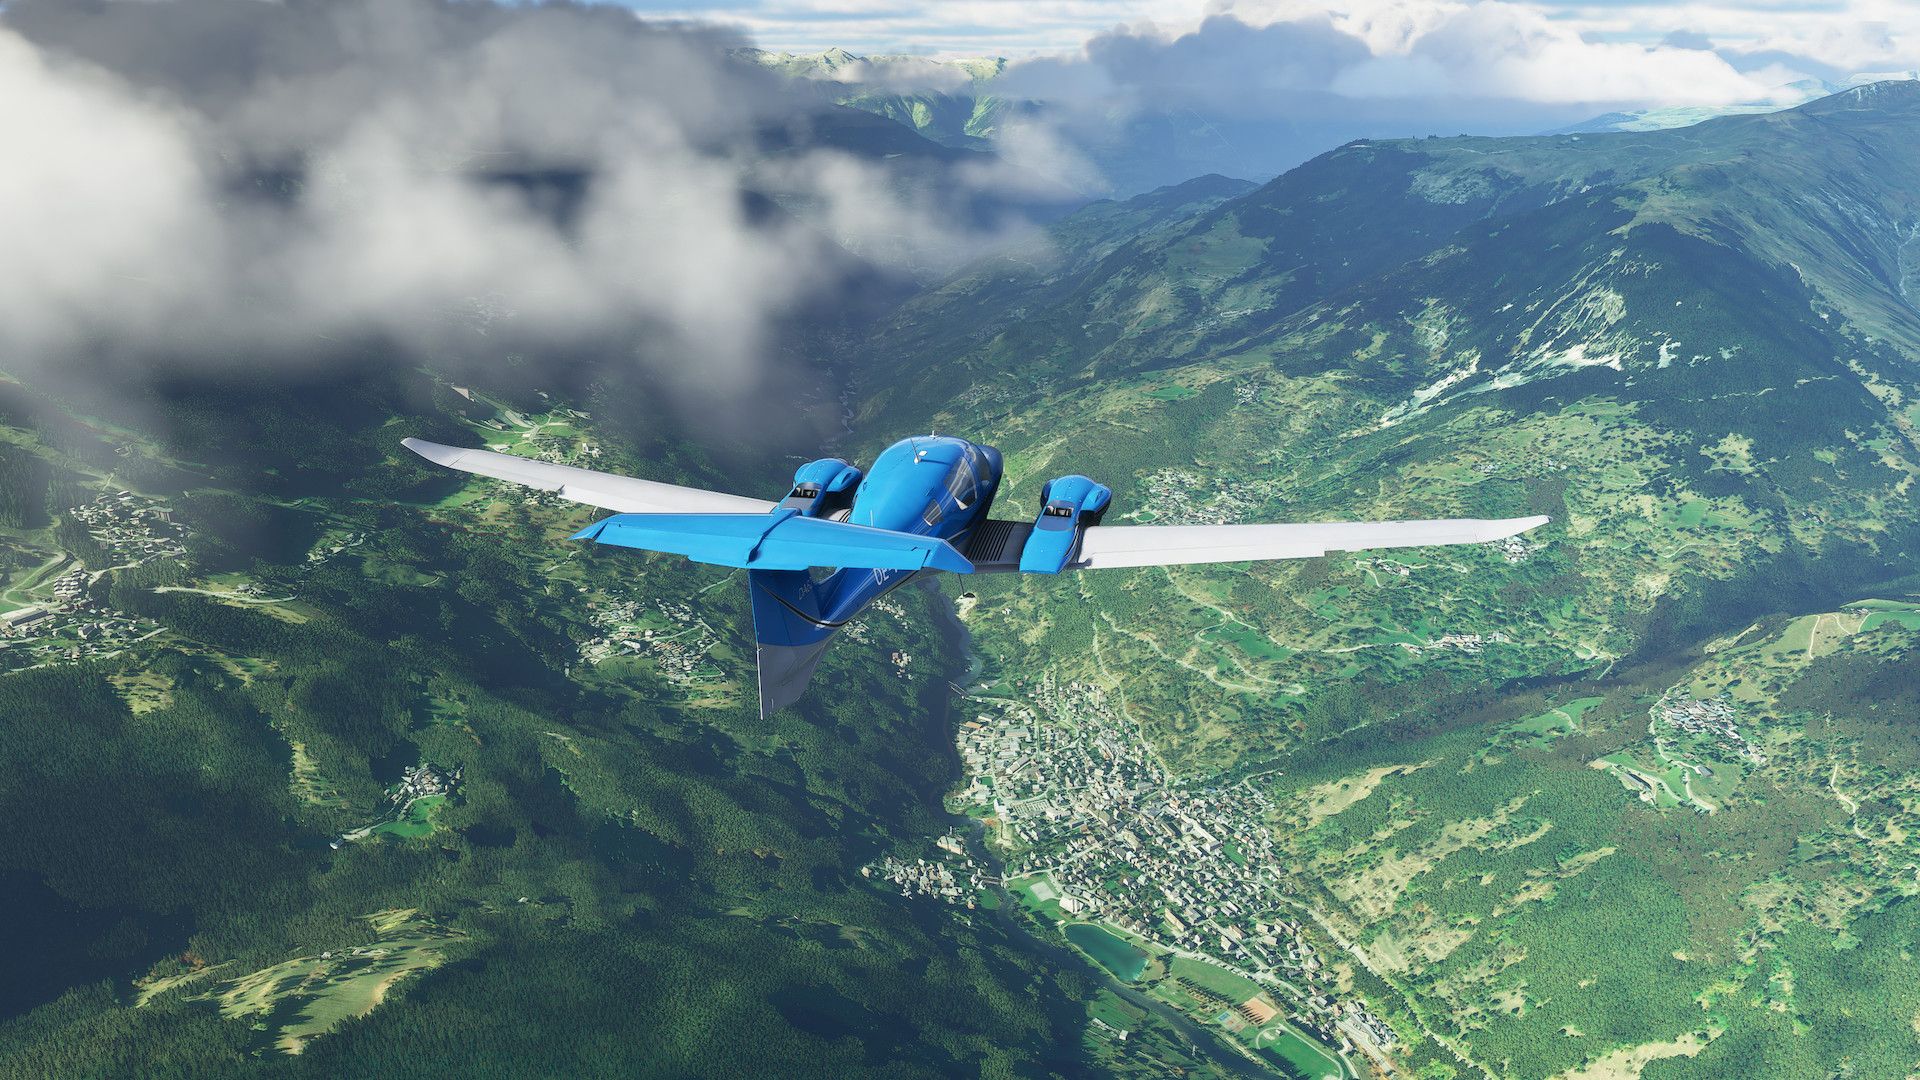 3d microsoft flight simulator backgrounds